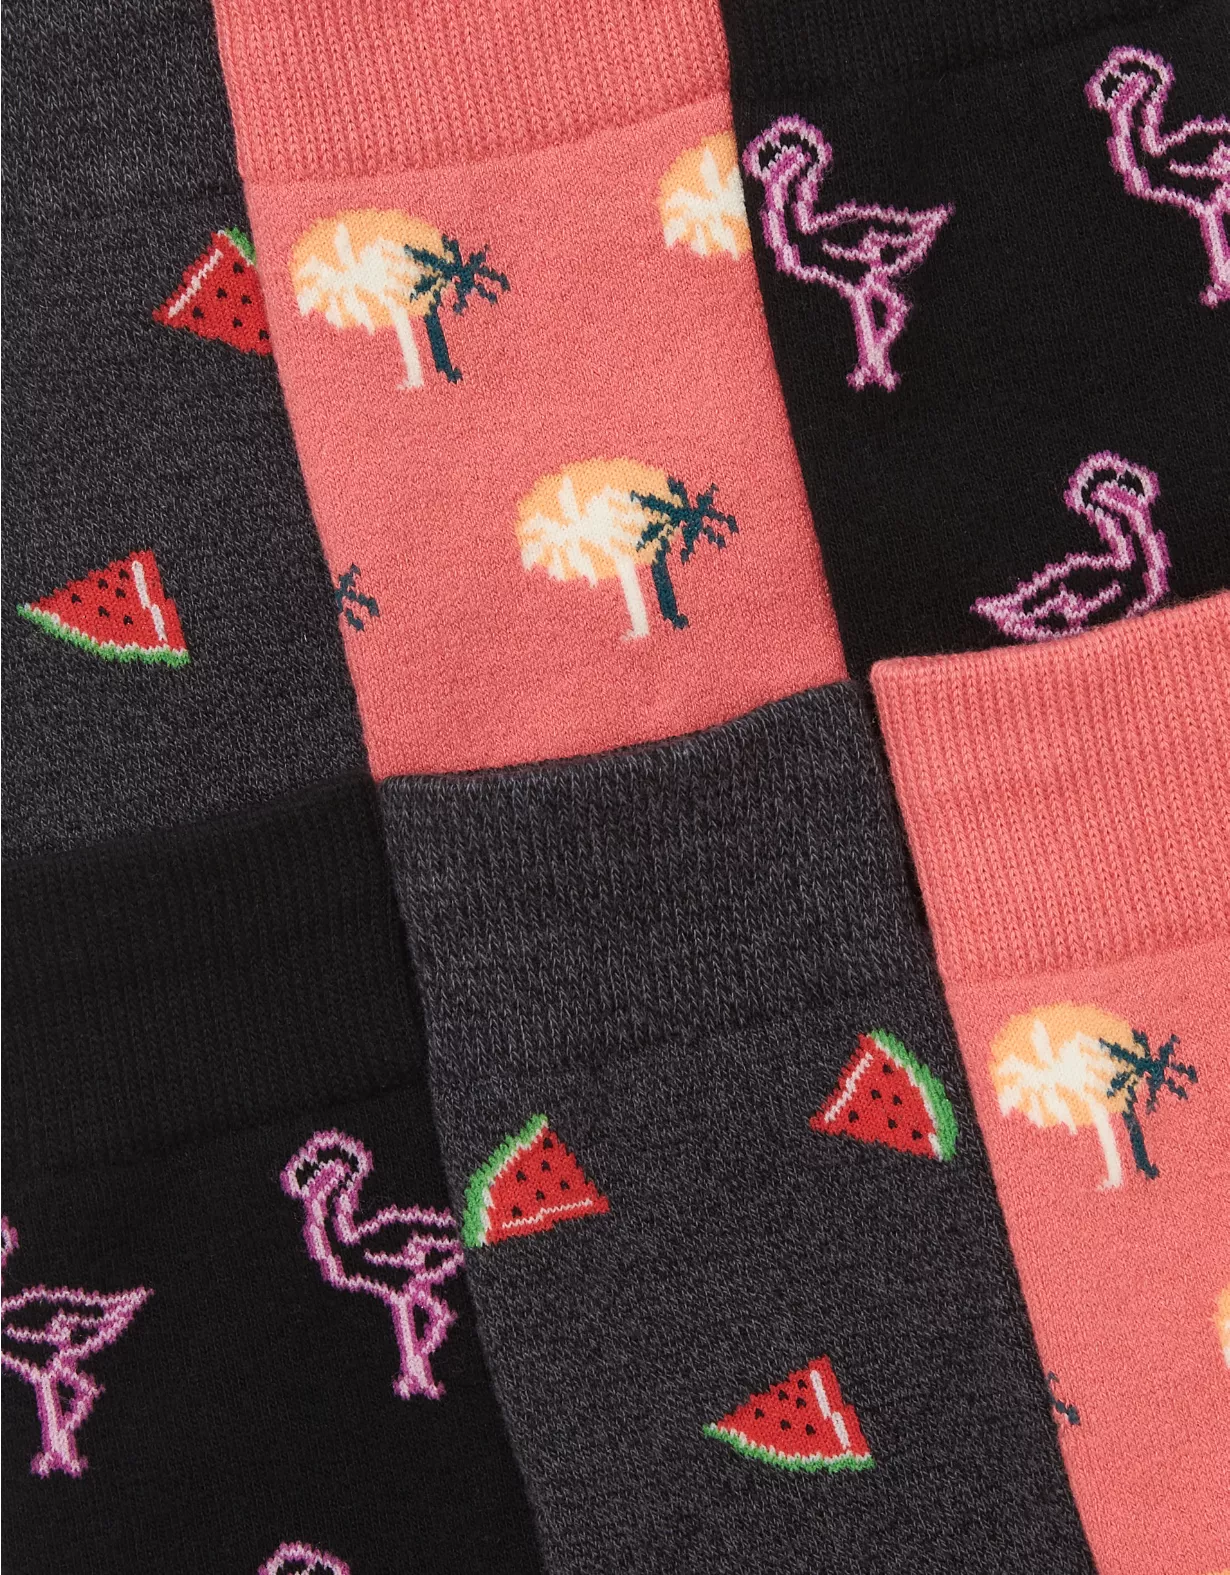 AE Summer Pinks Classic Sock 3-Pack